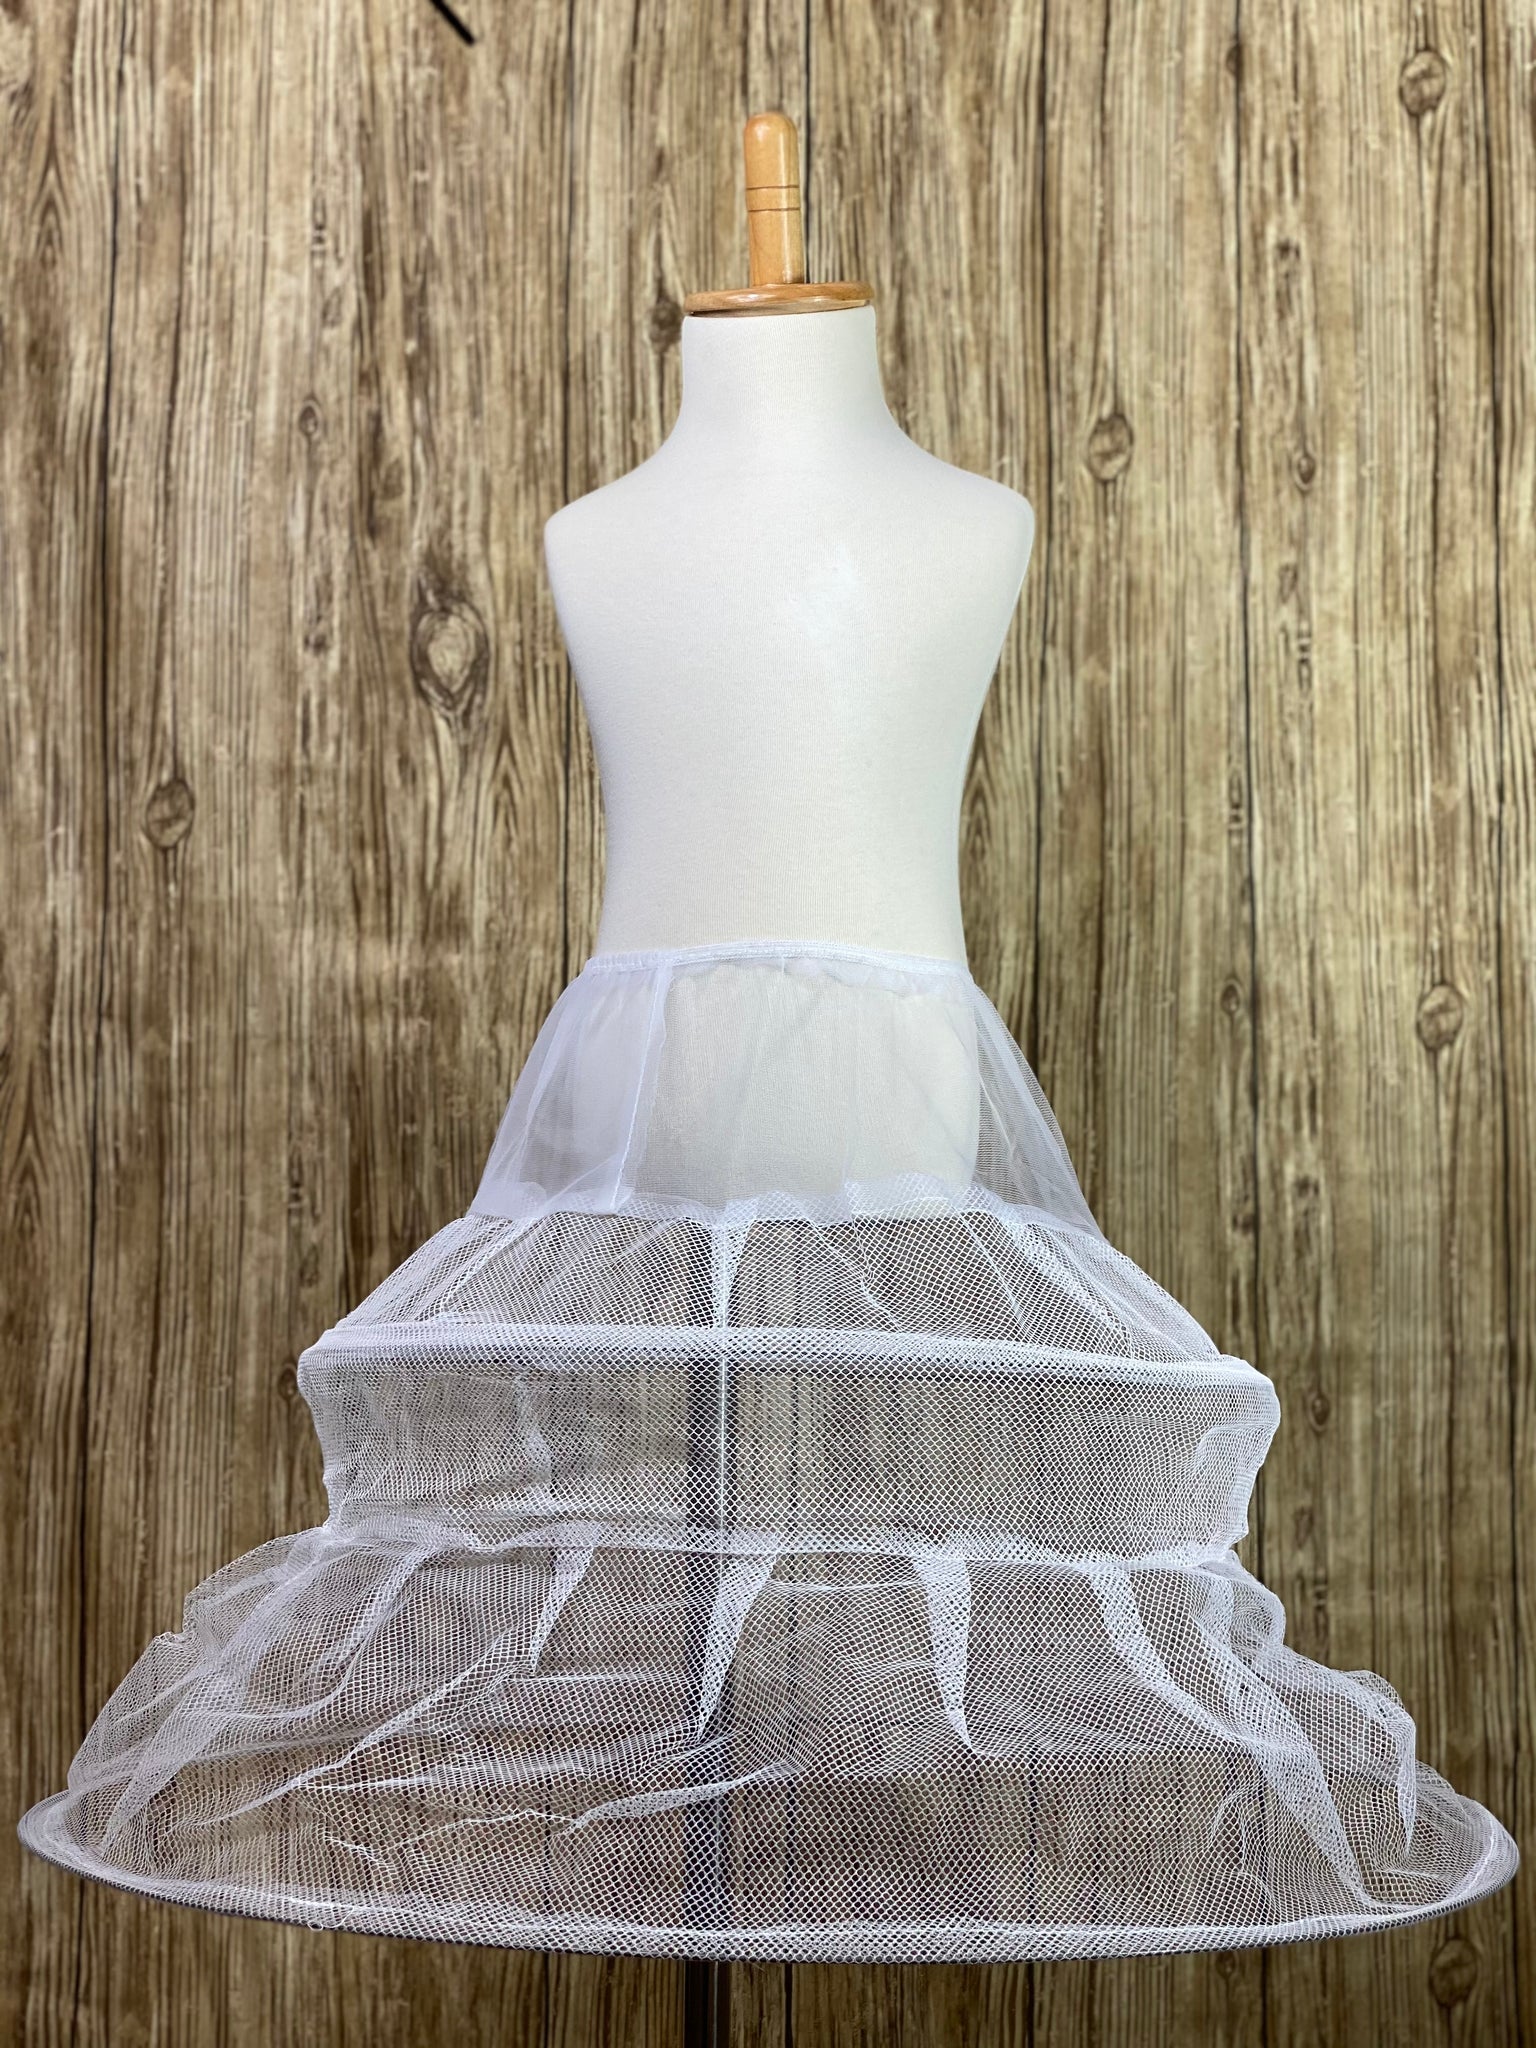 2 hoop mesh wire crinoline petticoat 2 sizes Small -21in diameter (wide), 13.5in tall / long (Size 3-6) Medium- 24in diameter (wide), 16.5in tall / long (Size 8-12) Elastic waist